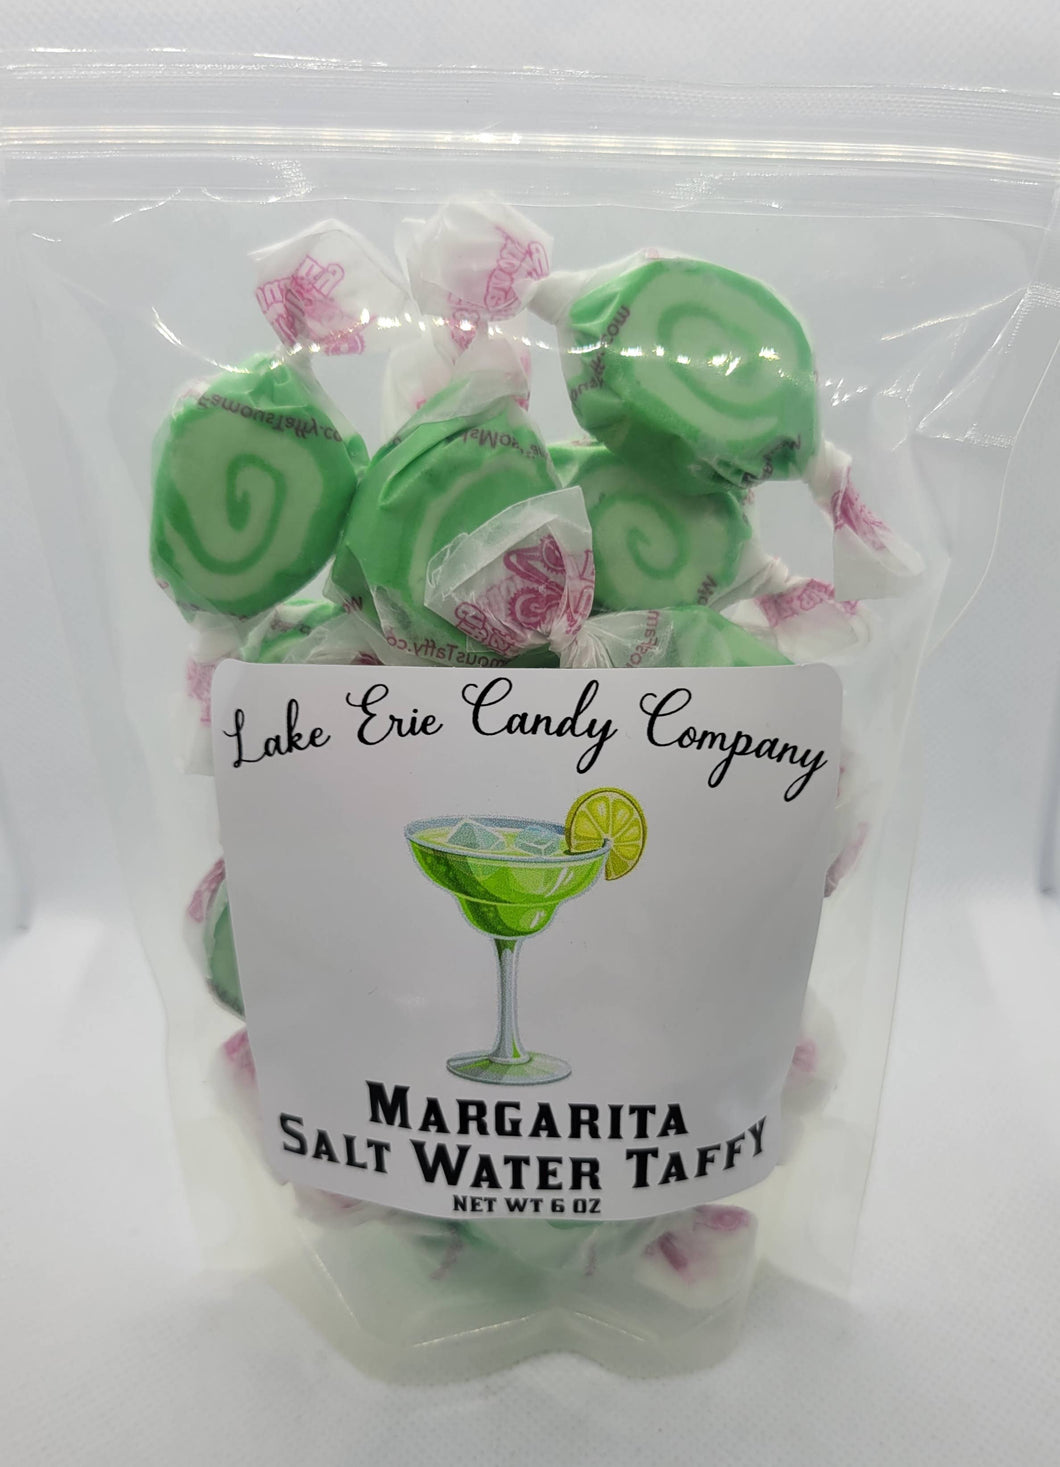 Lake Erie Candy Company - Margarita Salt Water Taffy